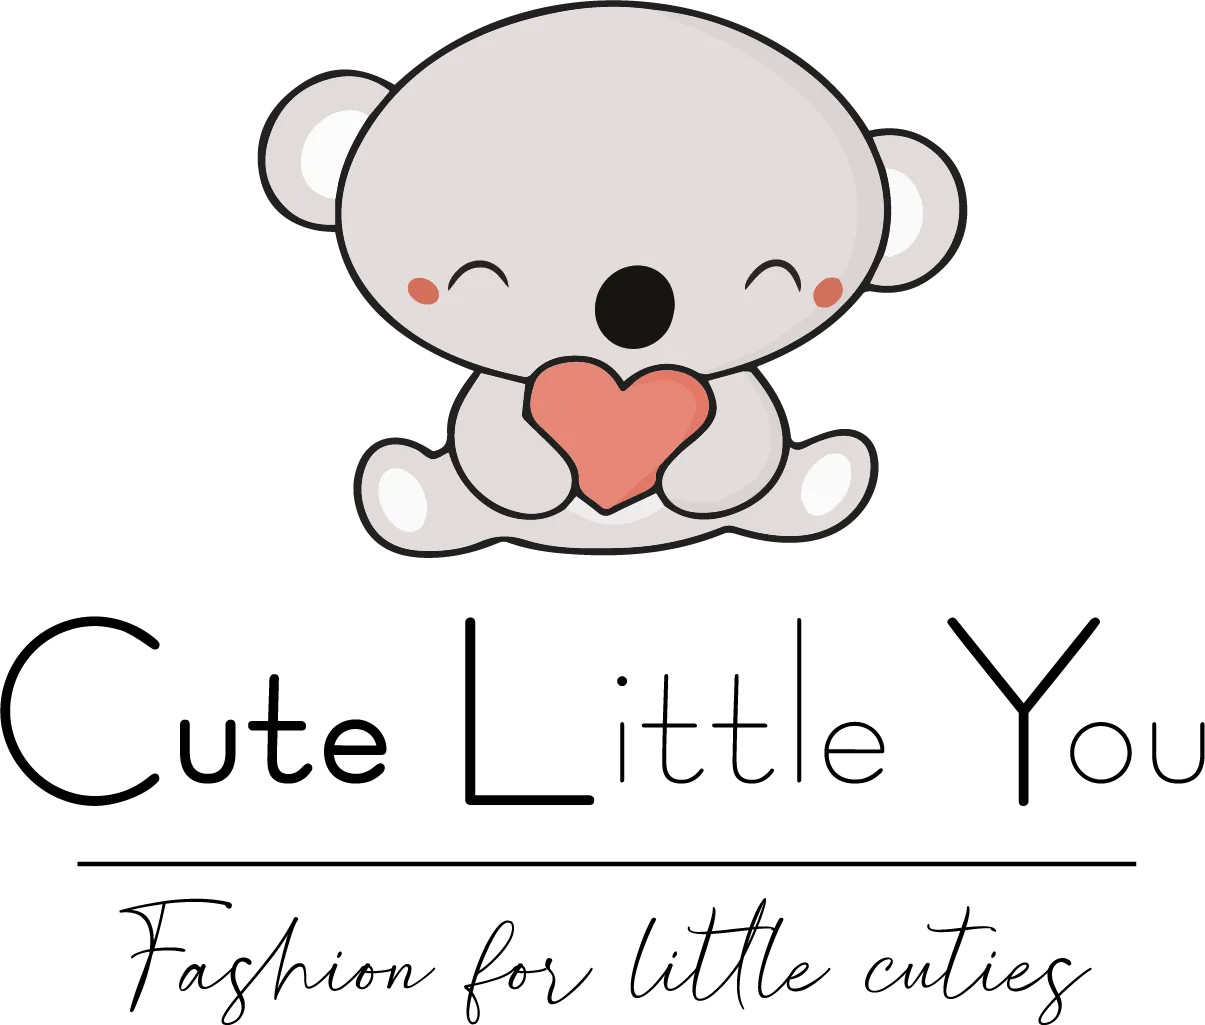 Cute Little You